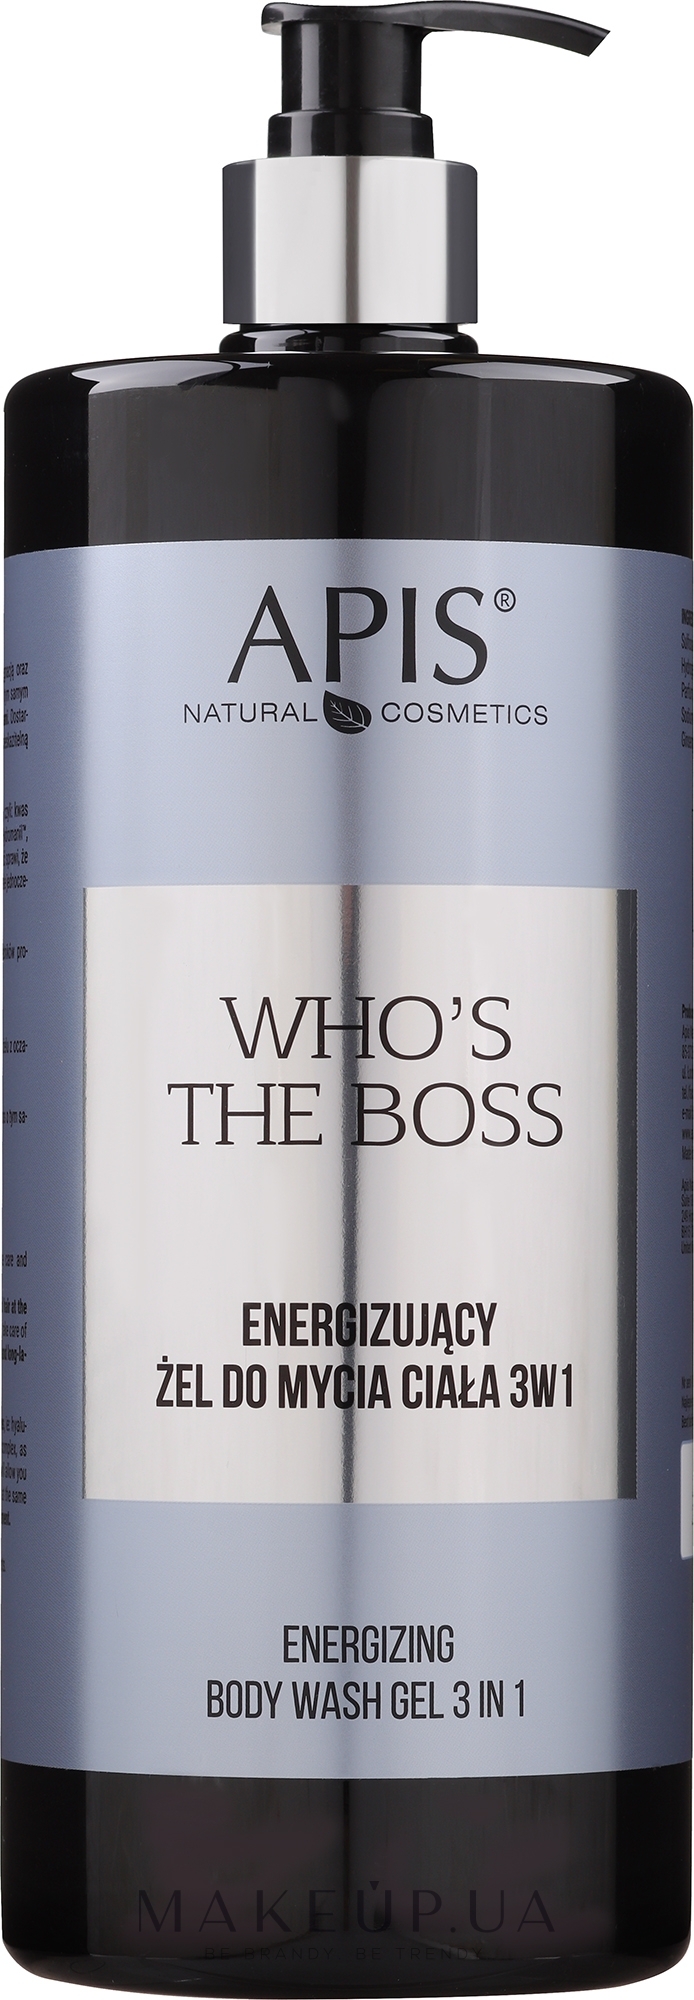 Энергетический гель для душа 3 в 1 - APIS Professional Who's The Boss Energizing Body Wash Gel 3 in 1 — фото 1000ml